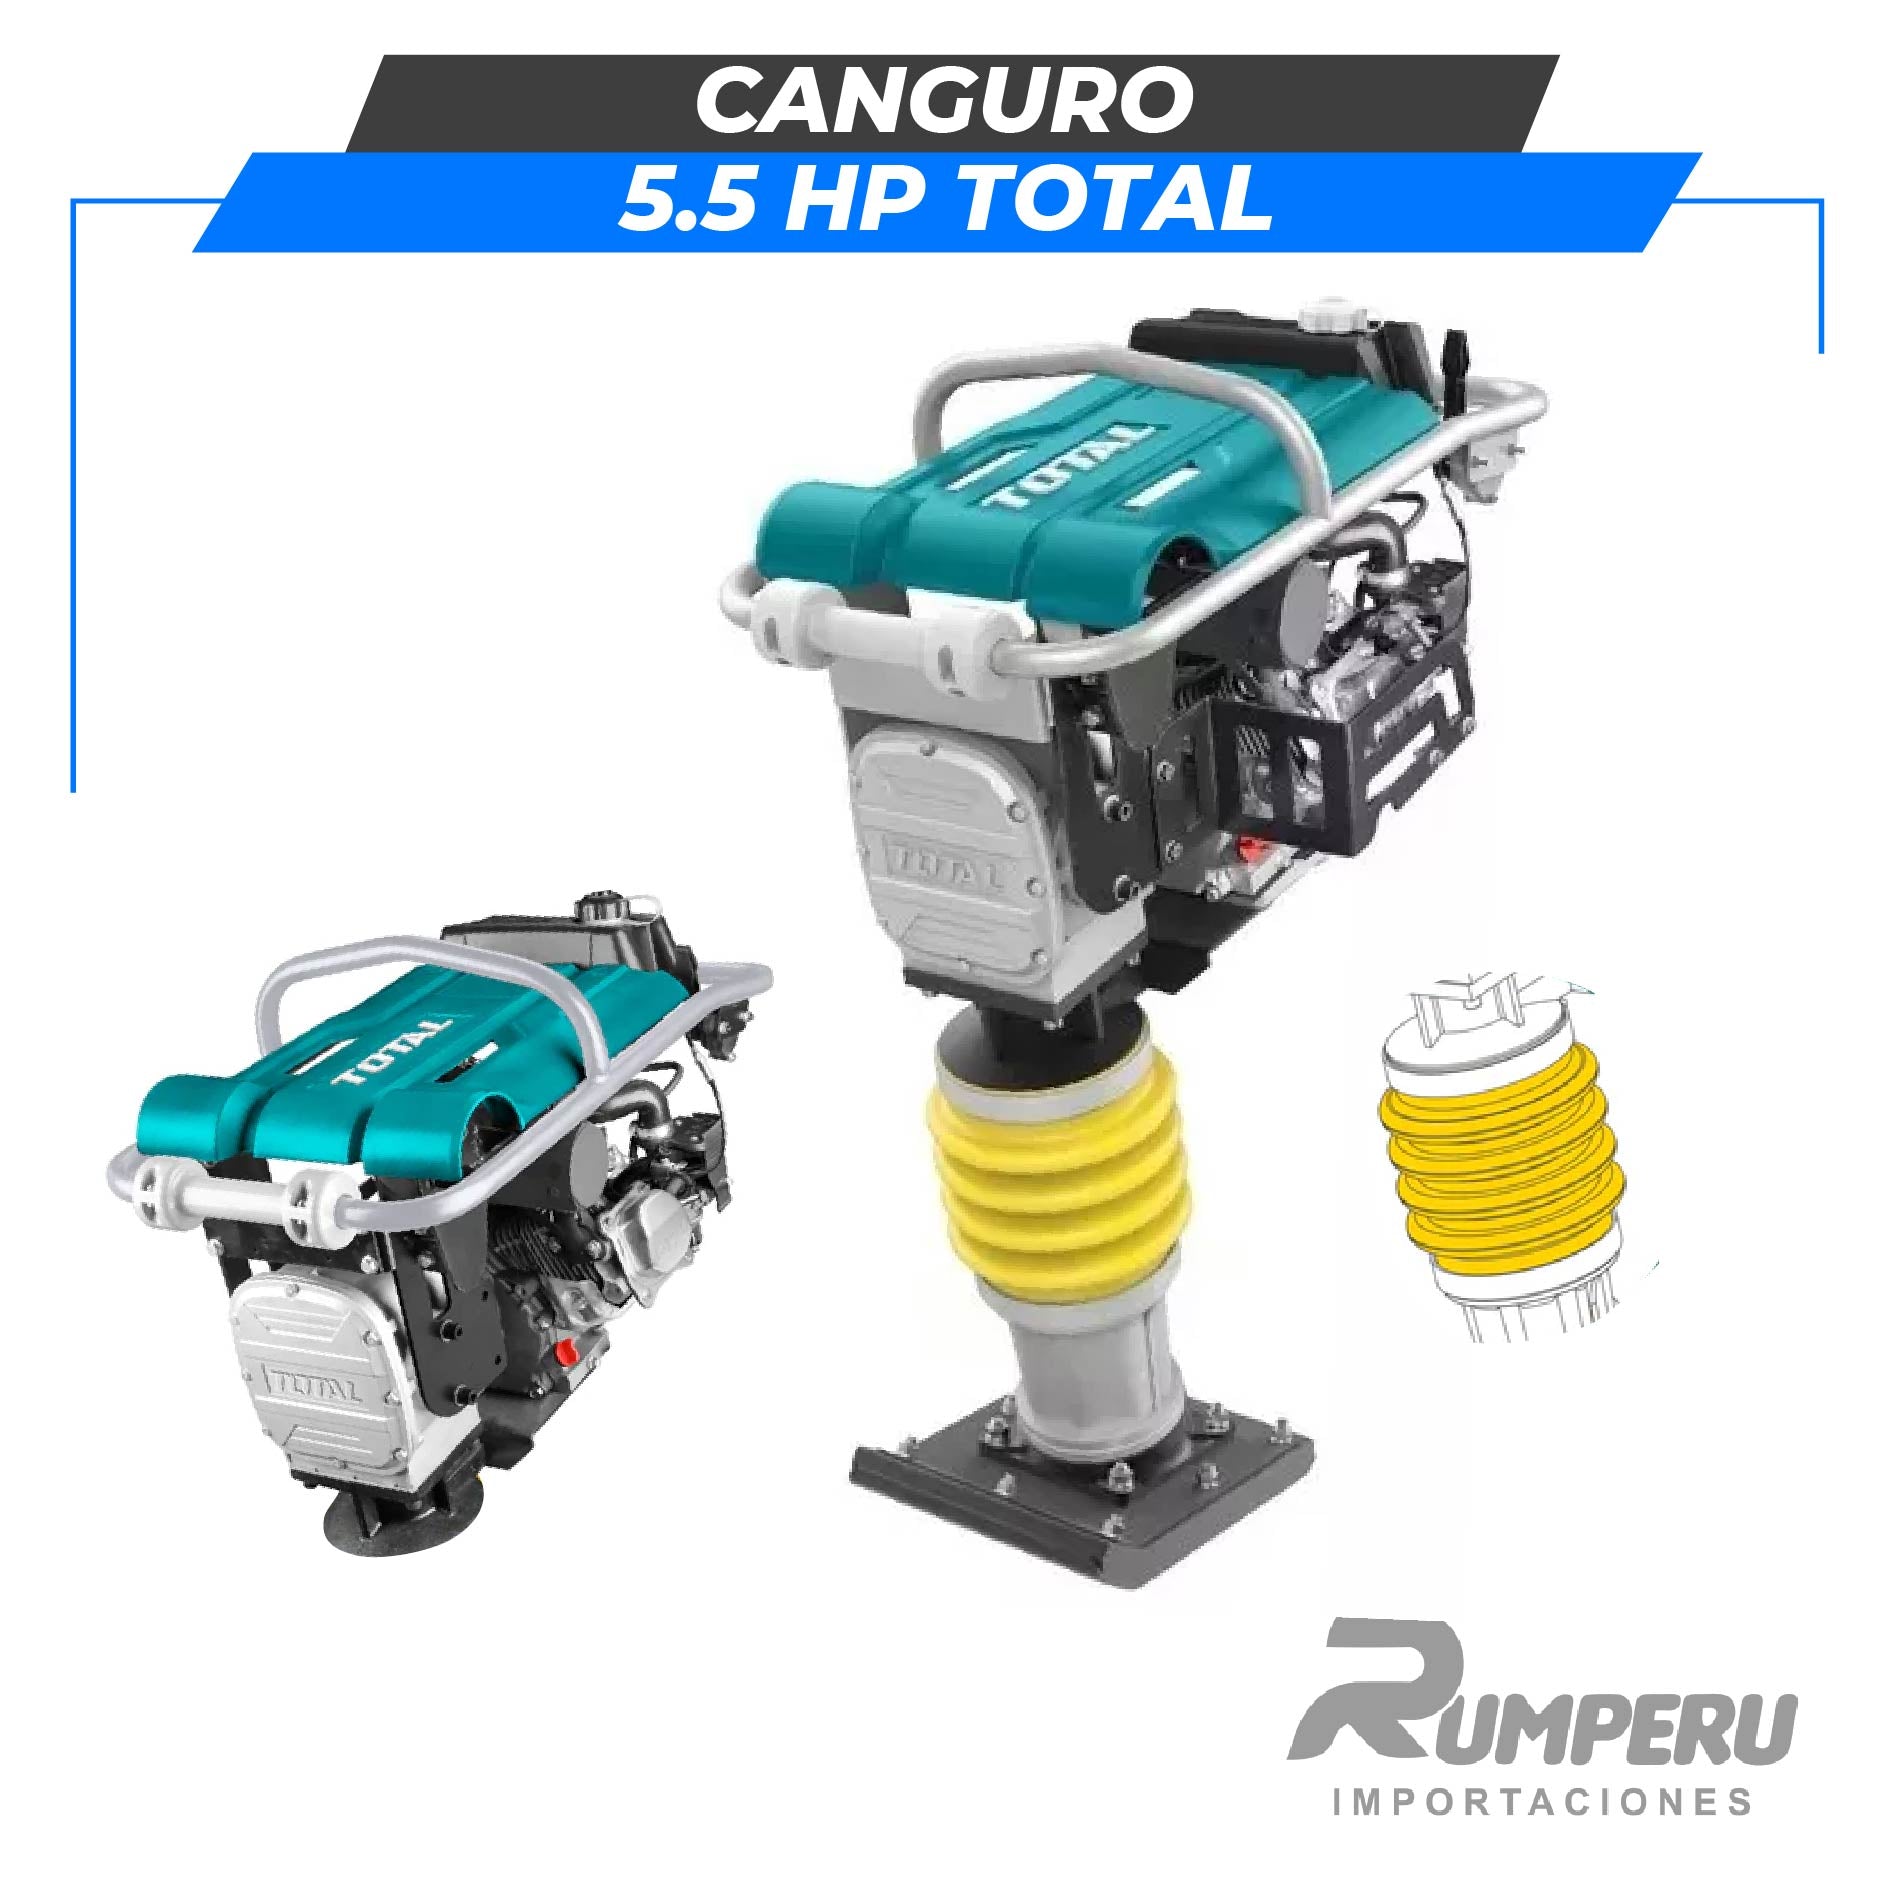 Canguro 5.5 Hp TOTAL